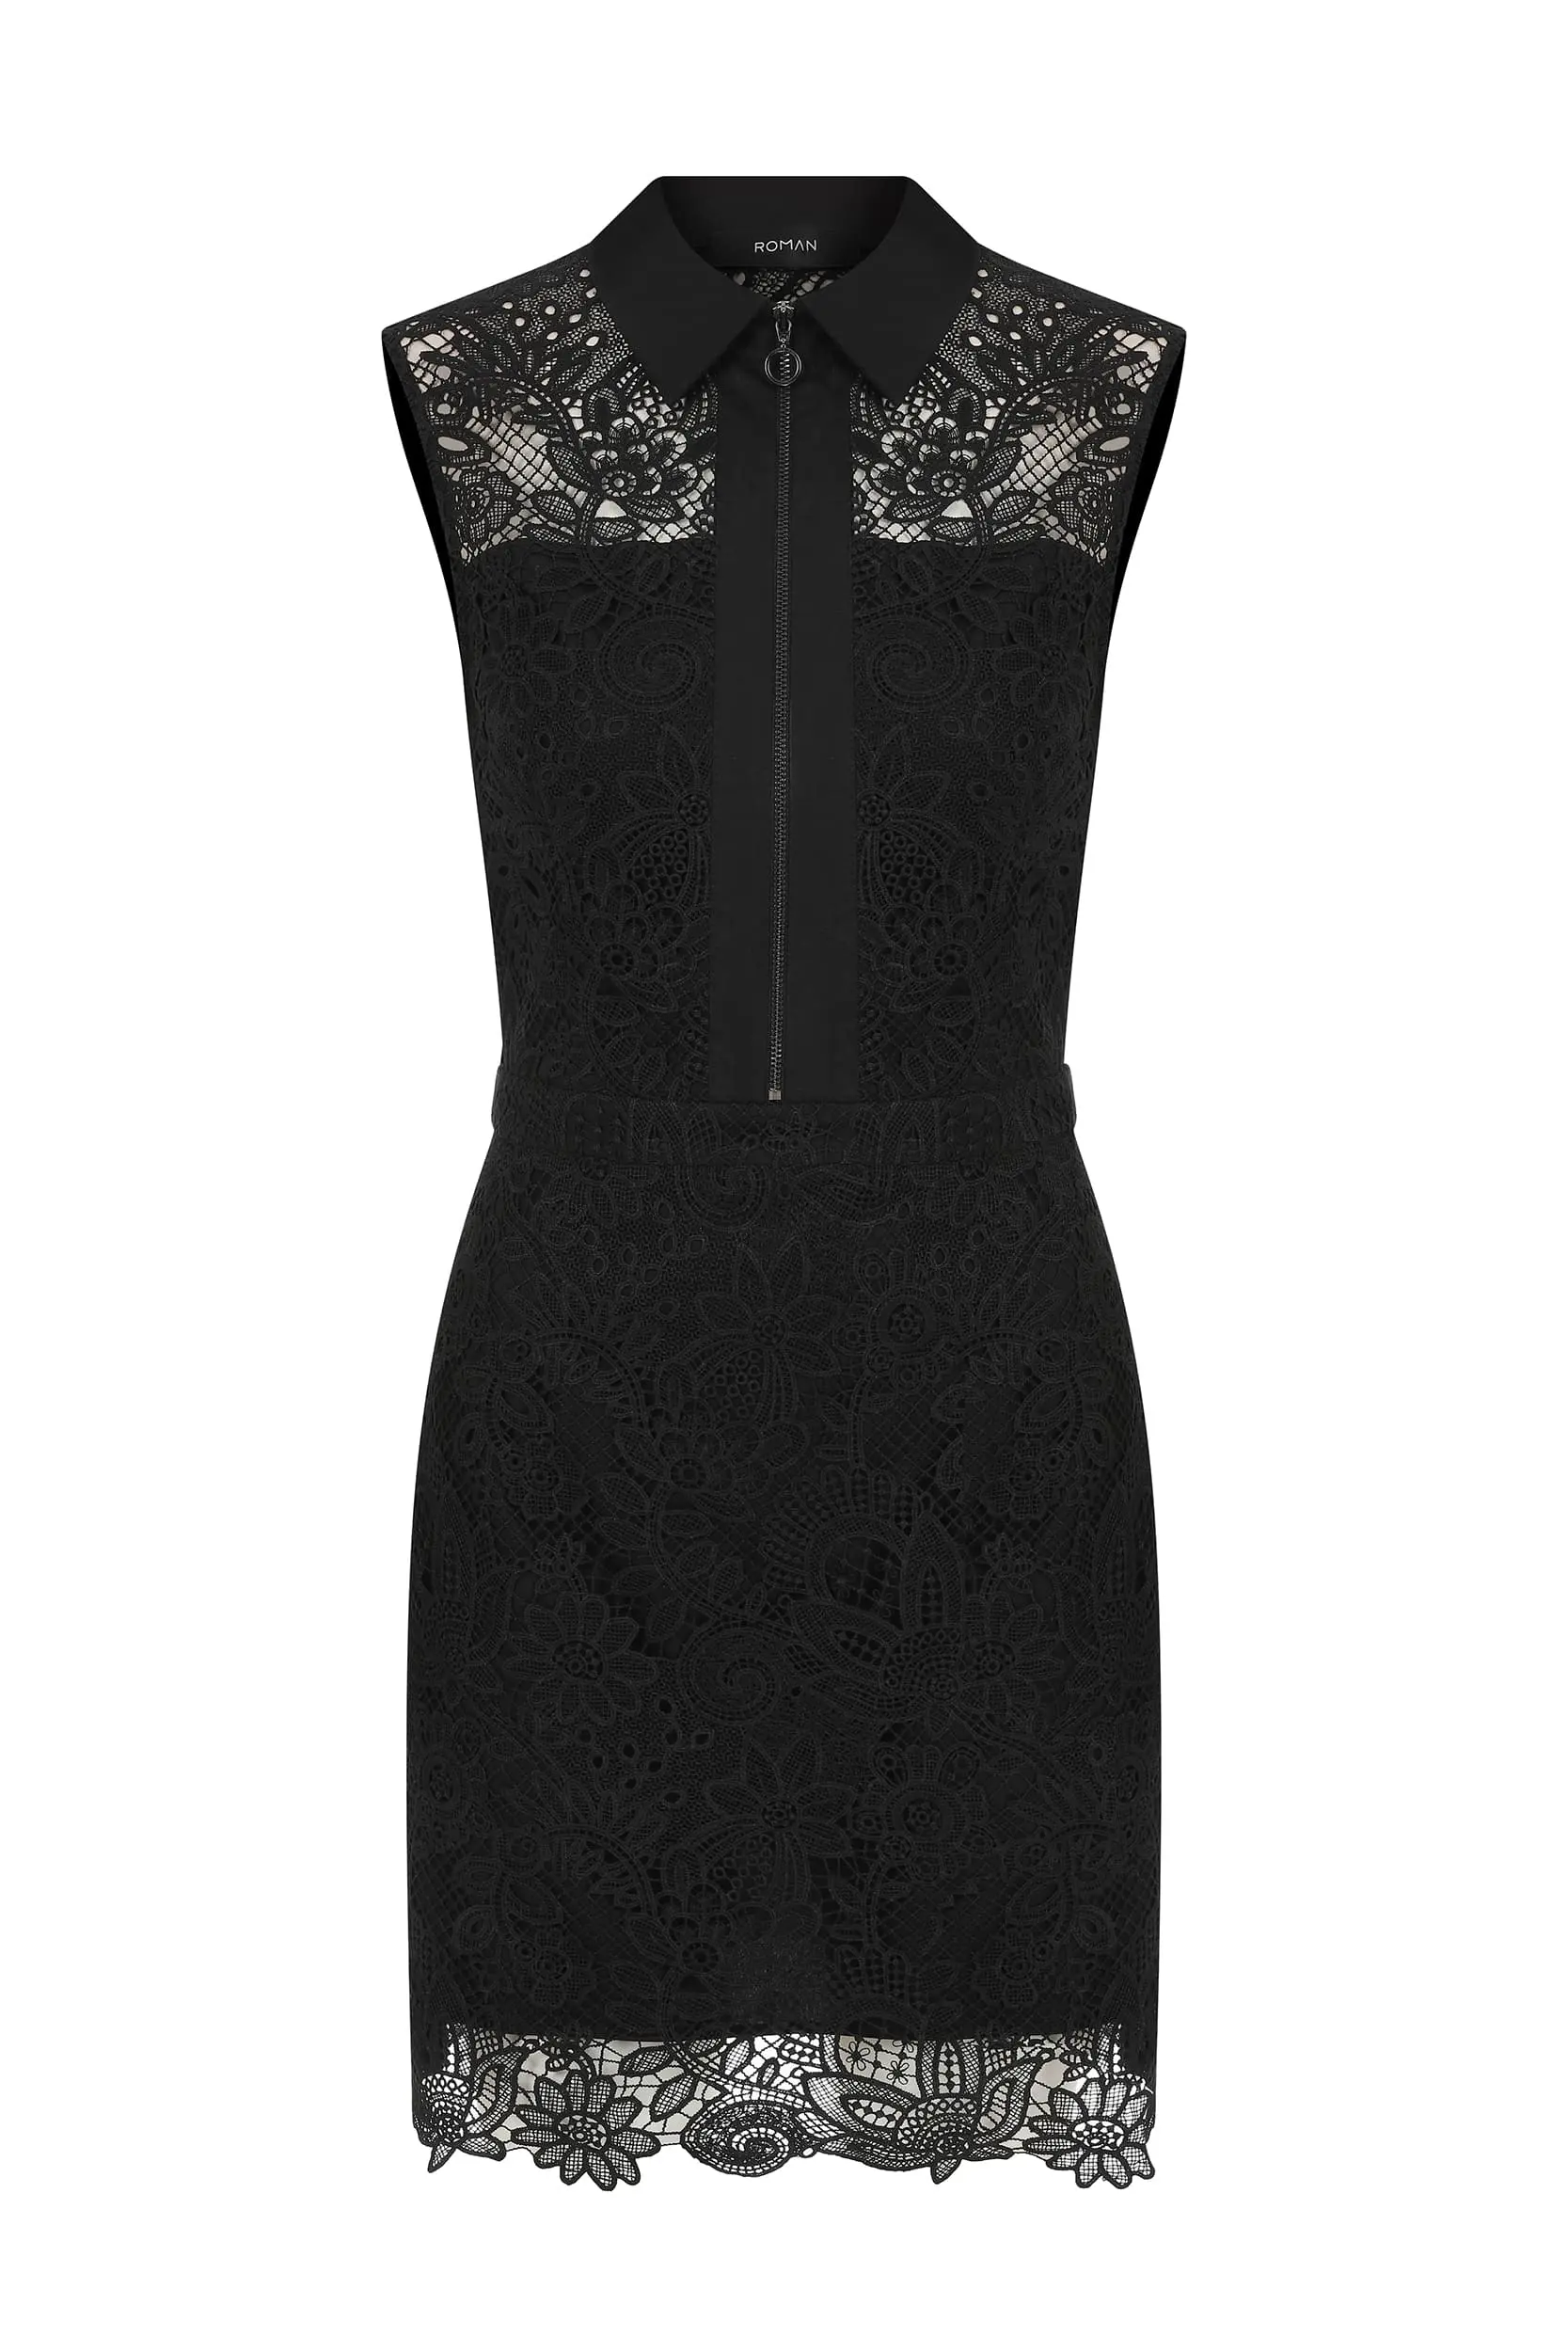 Roman Diva Lace Detailed Black Cocktail Dress - 4 / Black. 1